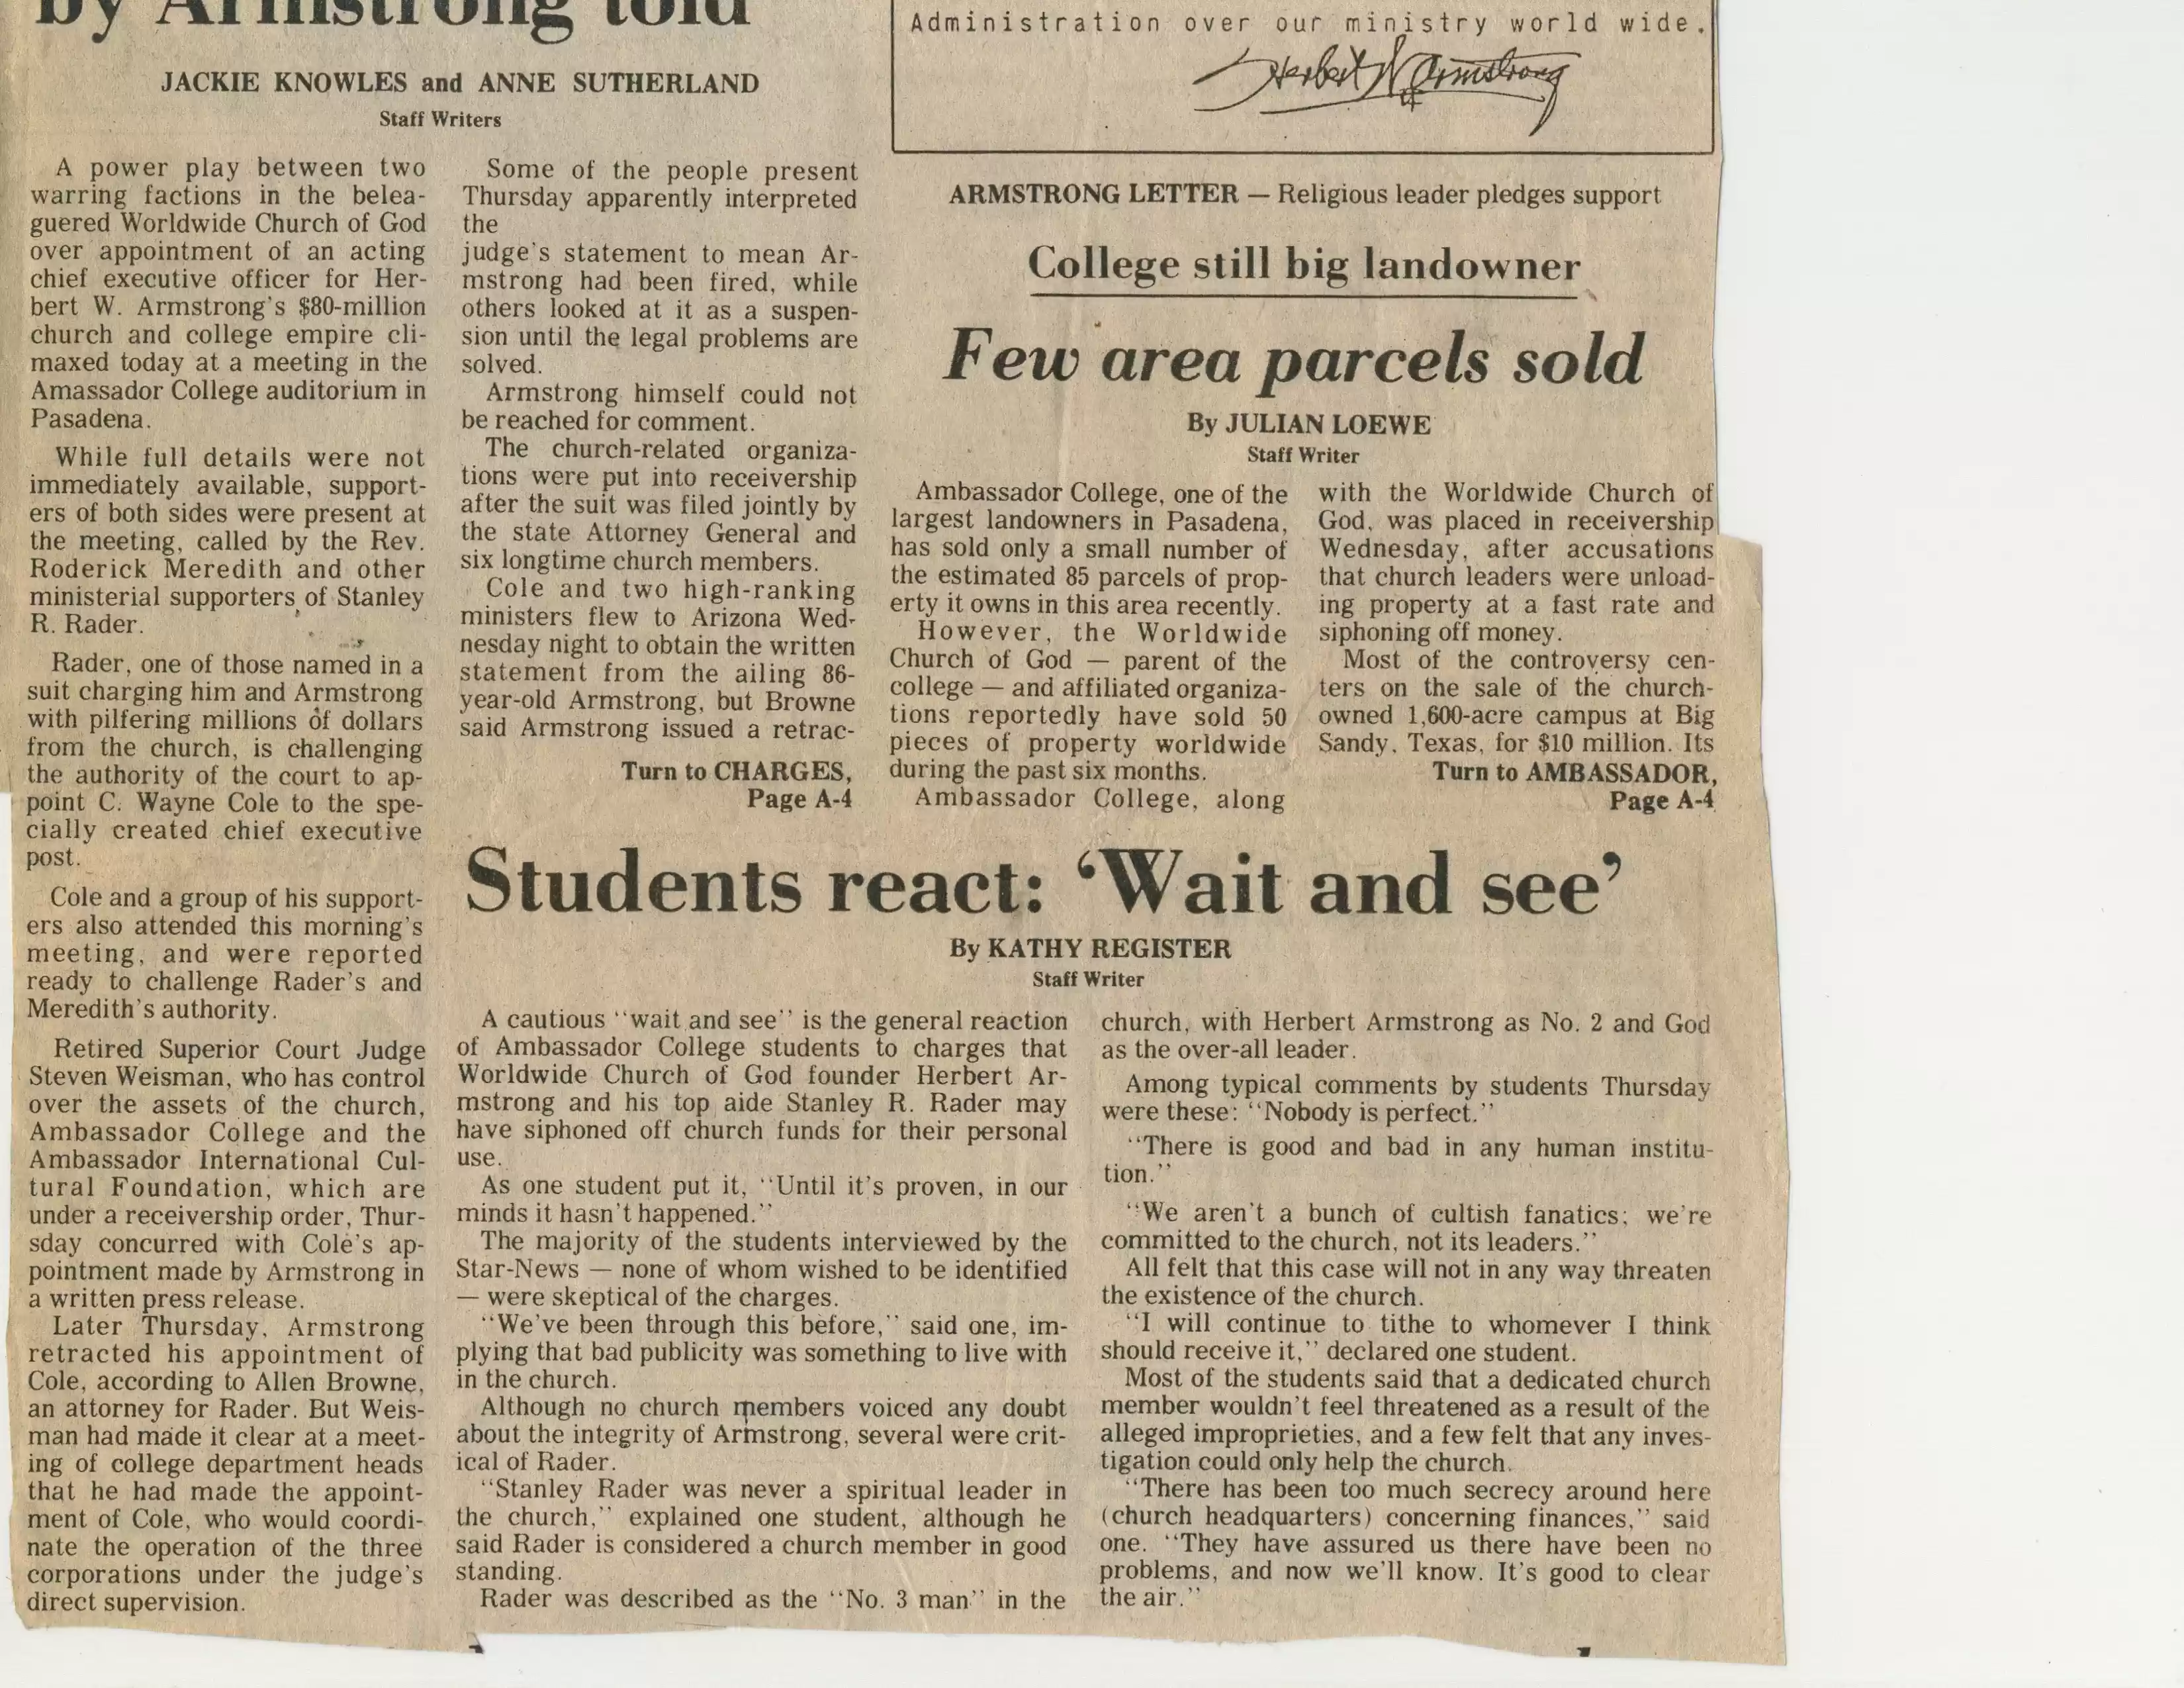 3. Pasadena Star News, 1-5-79